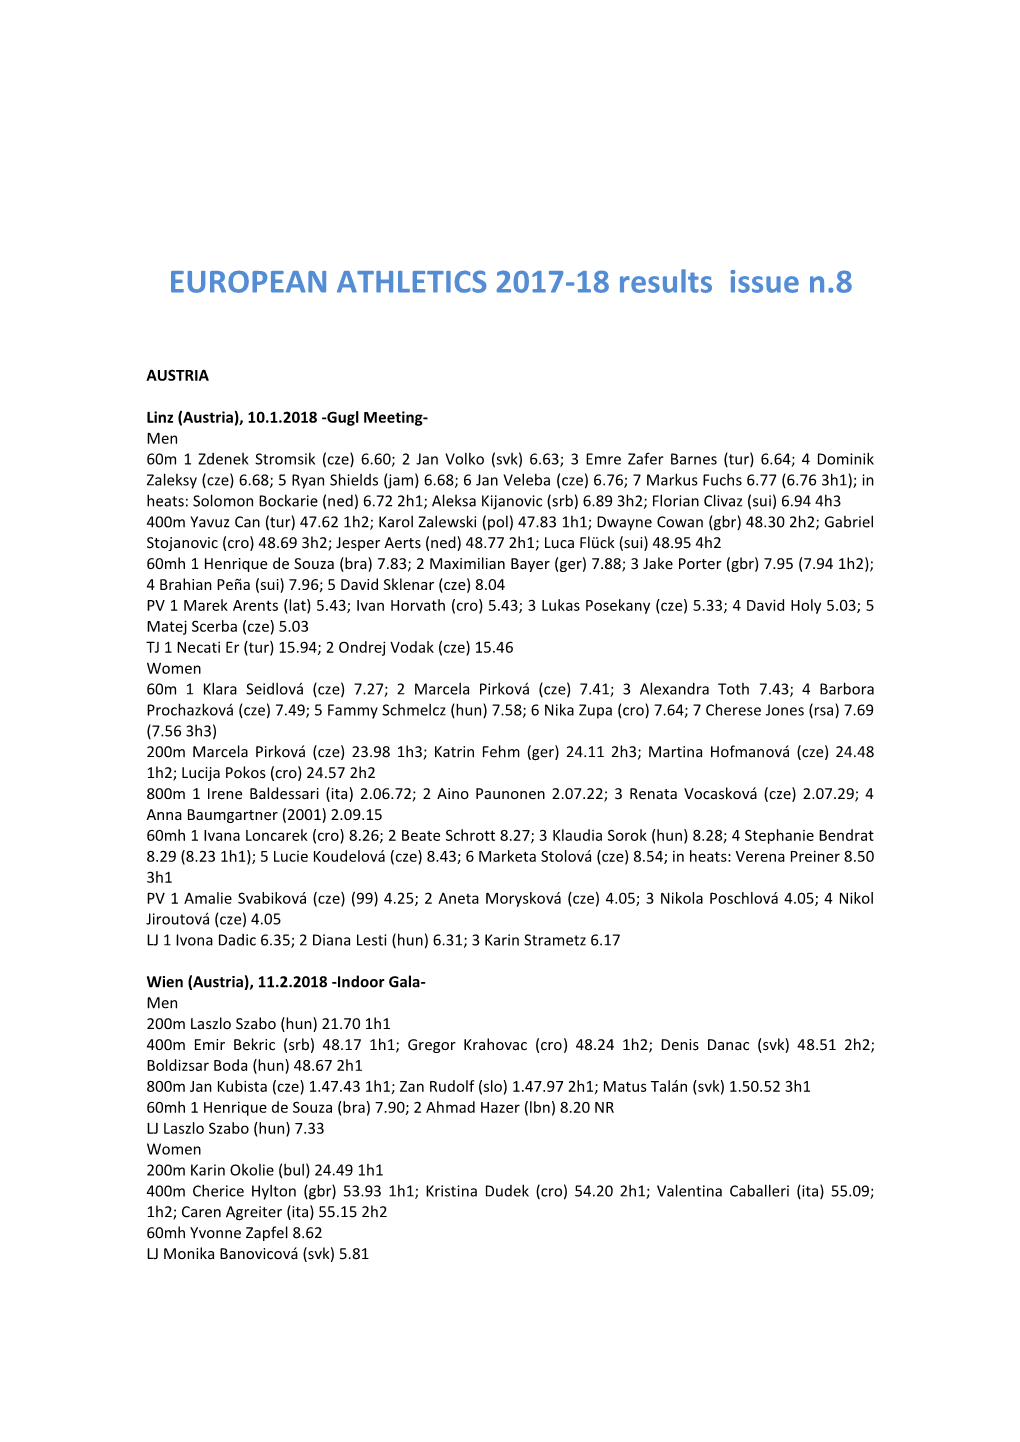 EUROPEAN ATHLETICS 2017-18 Results Issue N.8